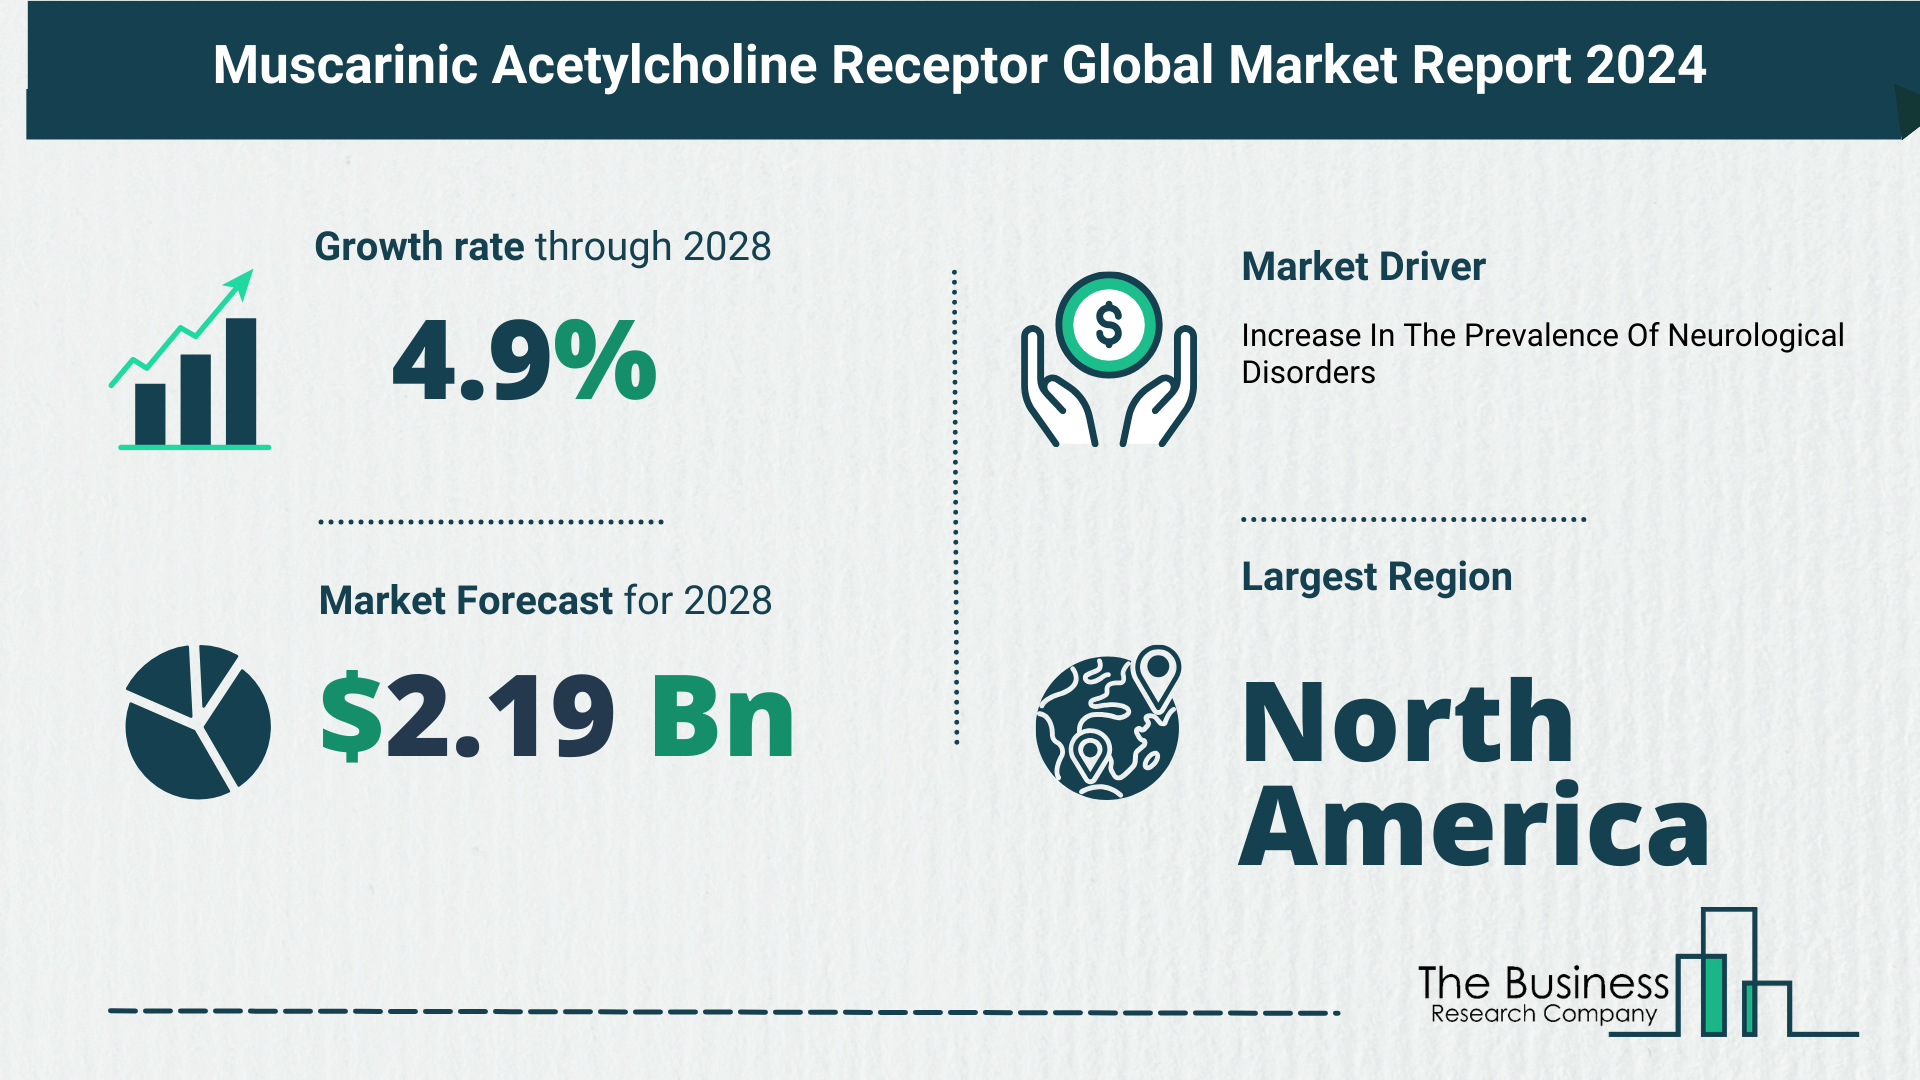 Global Muscarinic Acetylcholine Receptor Market